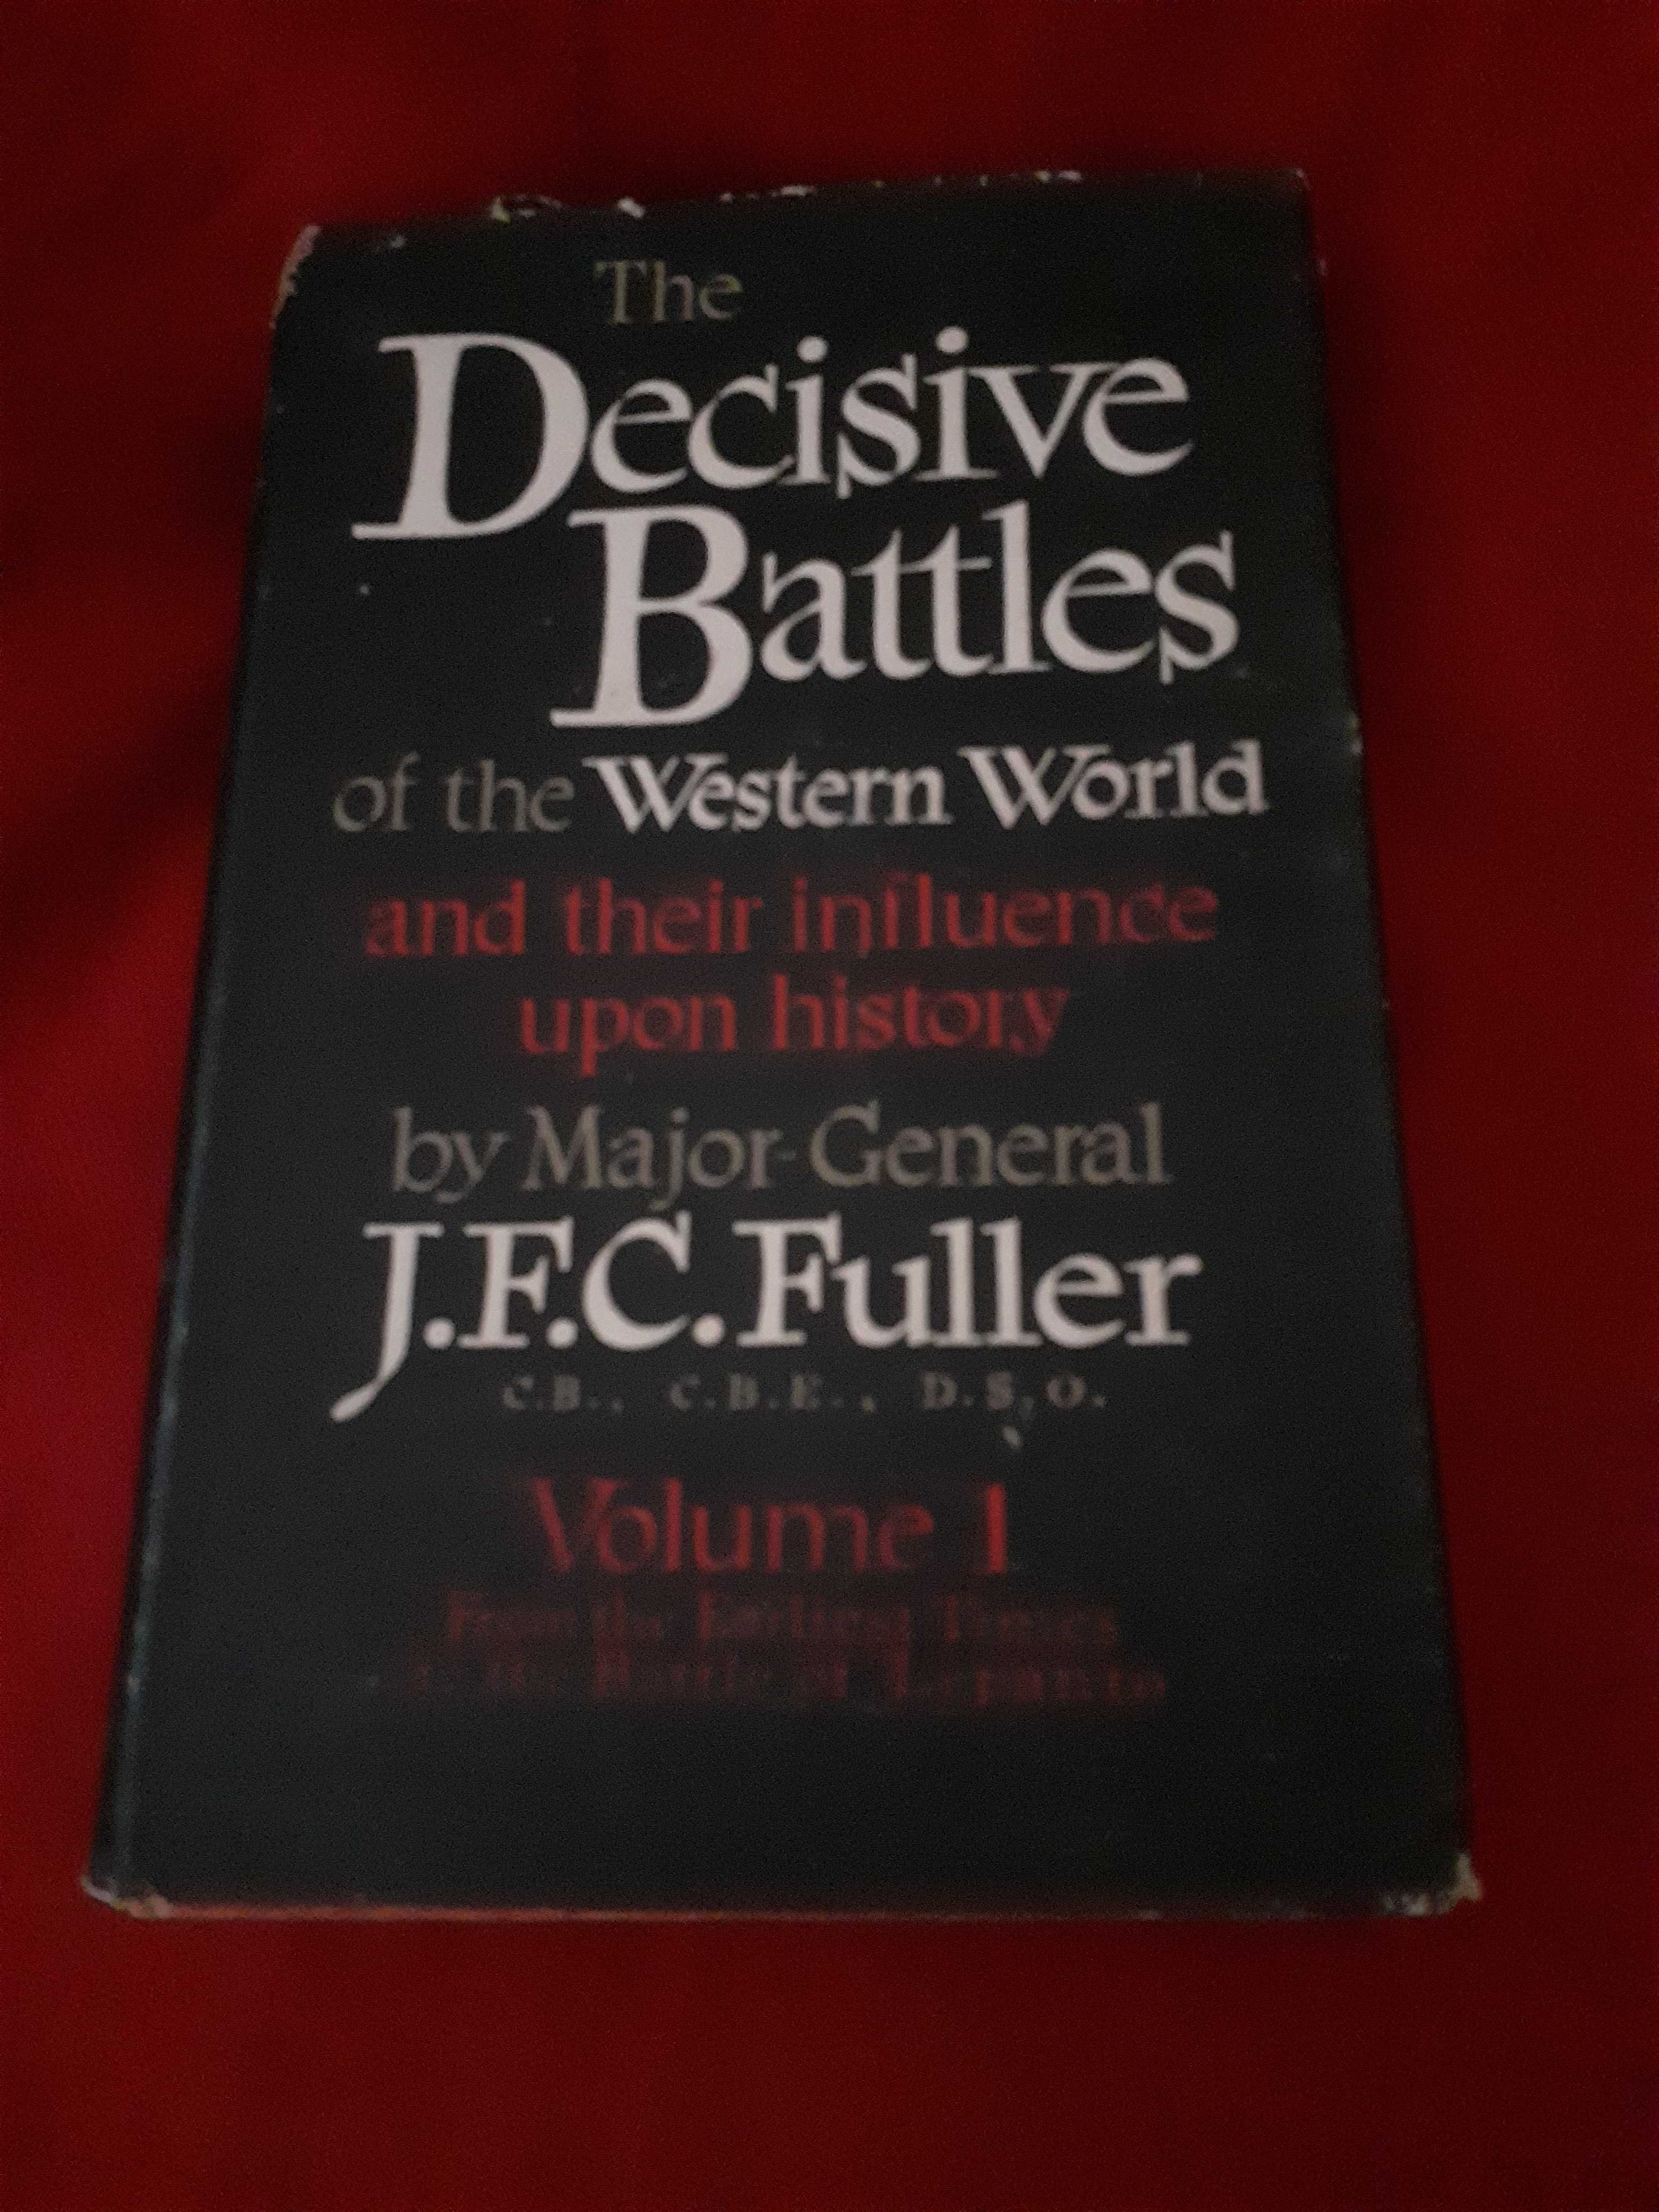 Livro " The Decisive Battles "